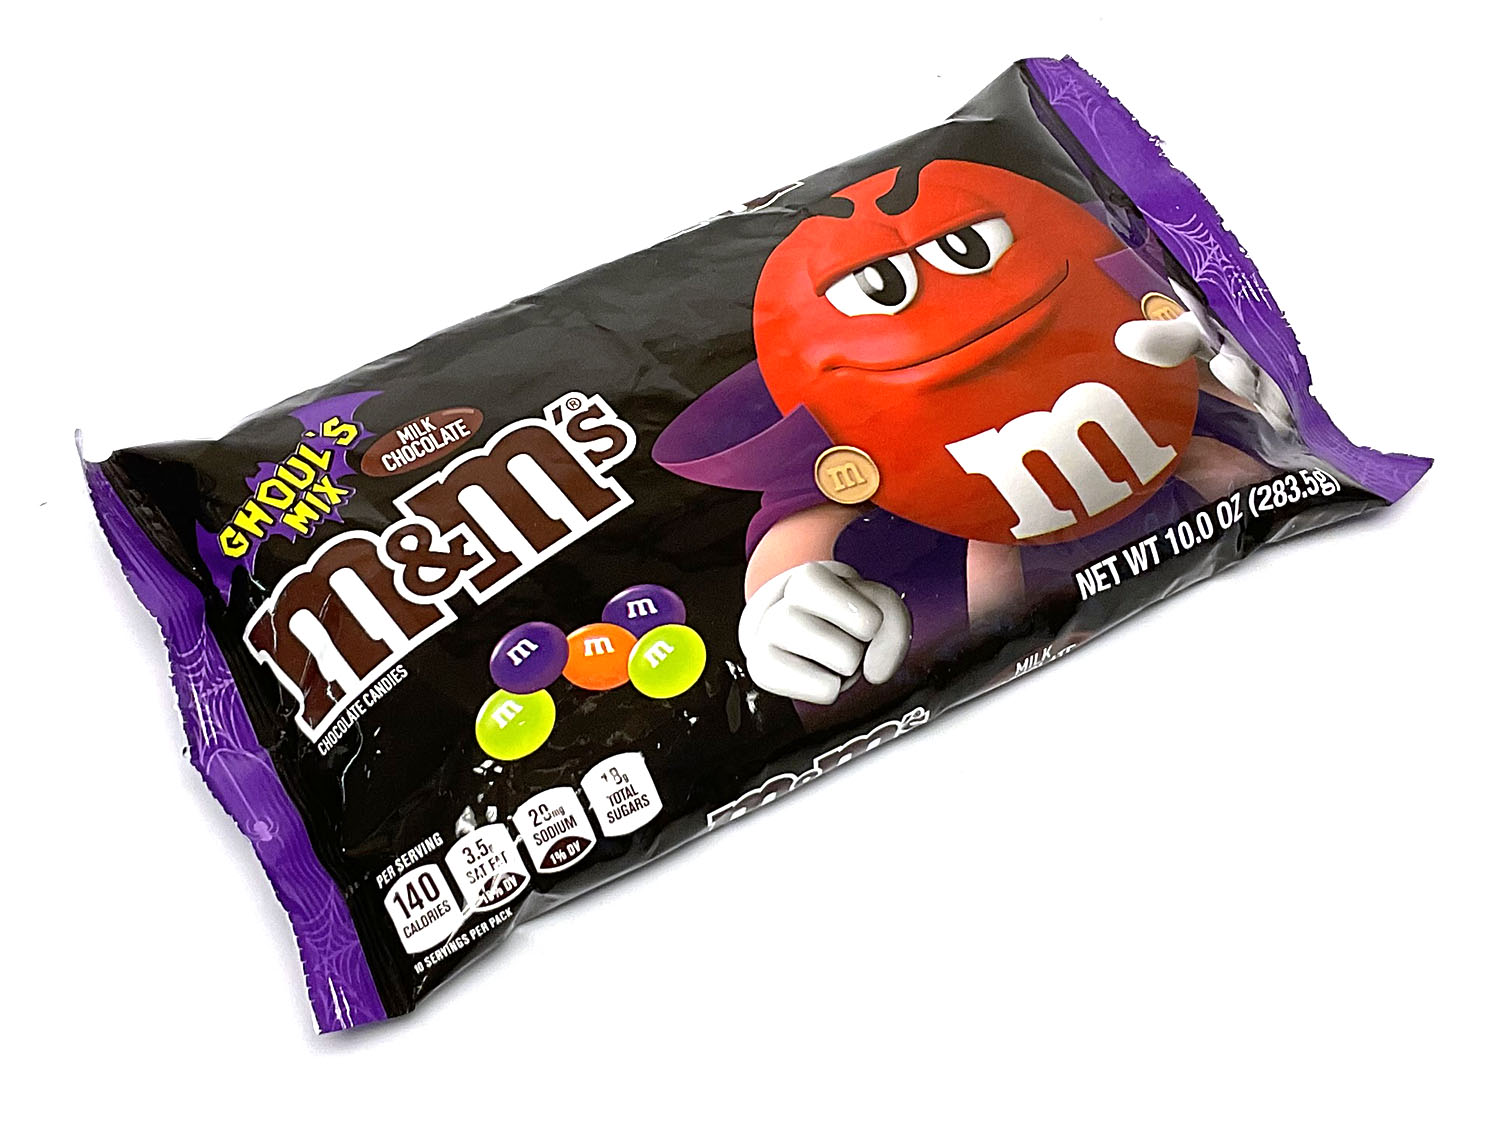 Peanut M&M's Milk Chocolate Candy - Green: 10-Ounce Bag